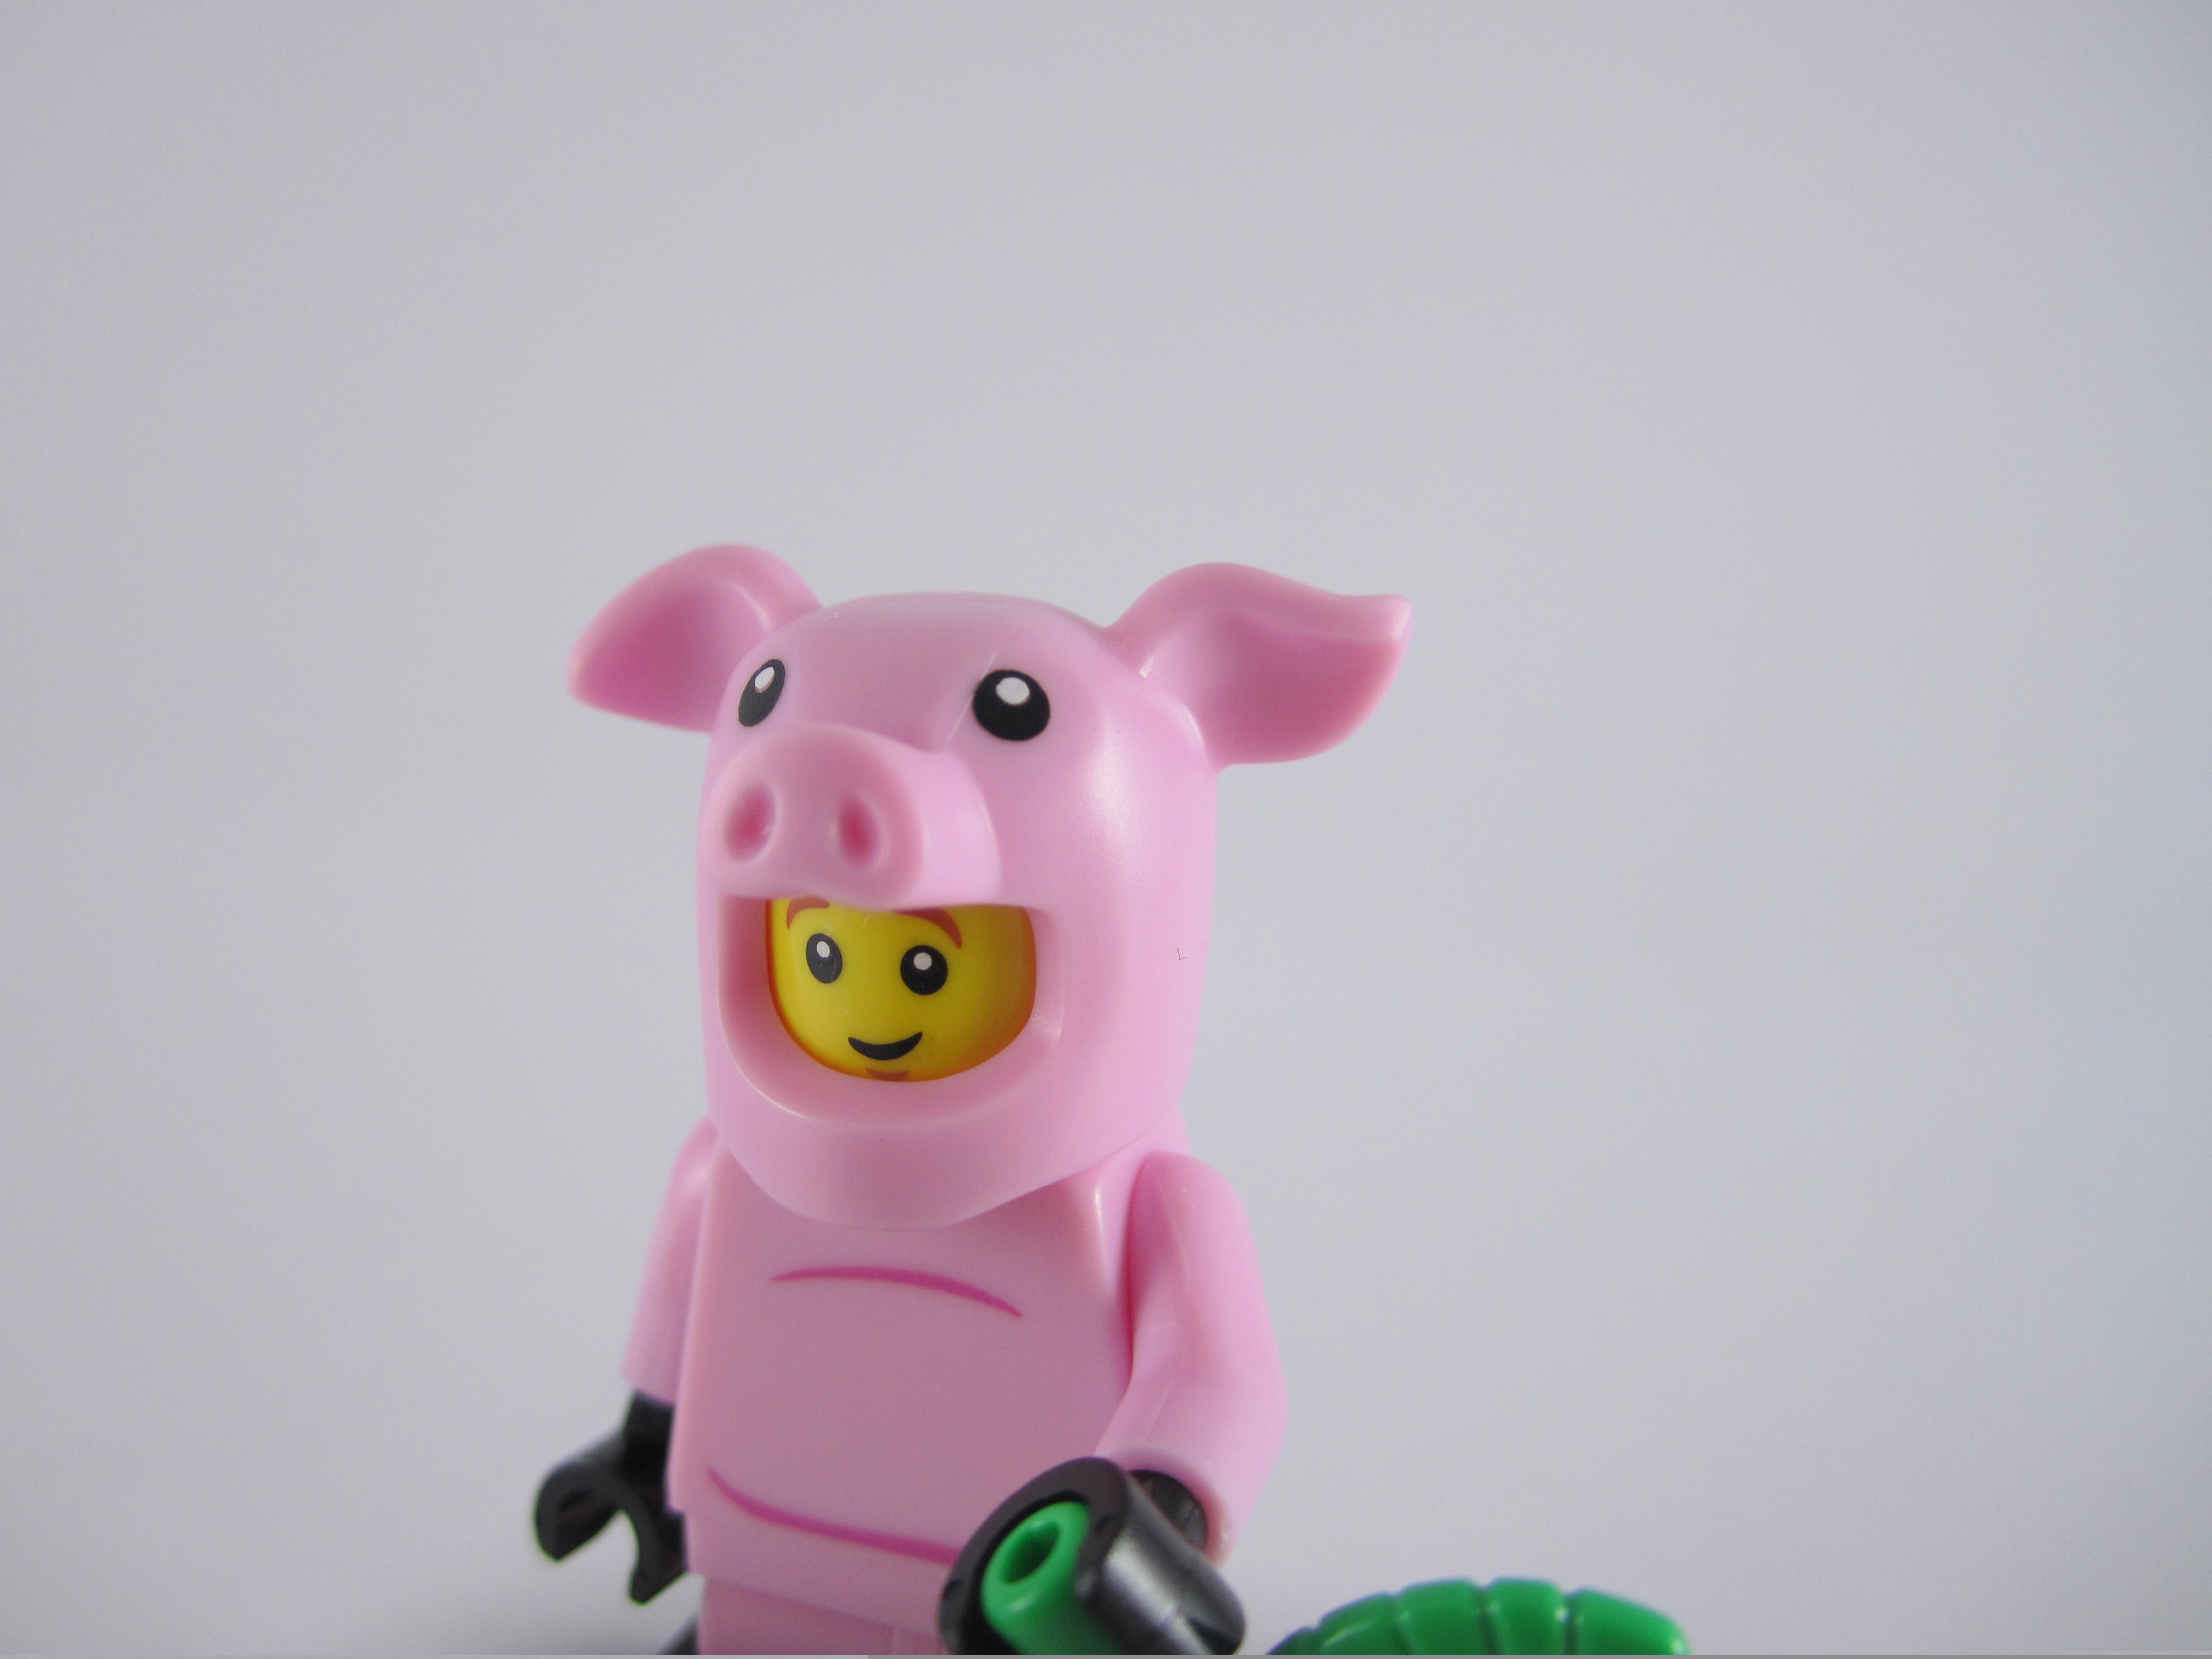 Stand Lego Minifigure Series 12 Piggy Guy w/ Accessory Pig Costume 